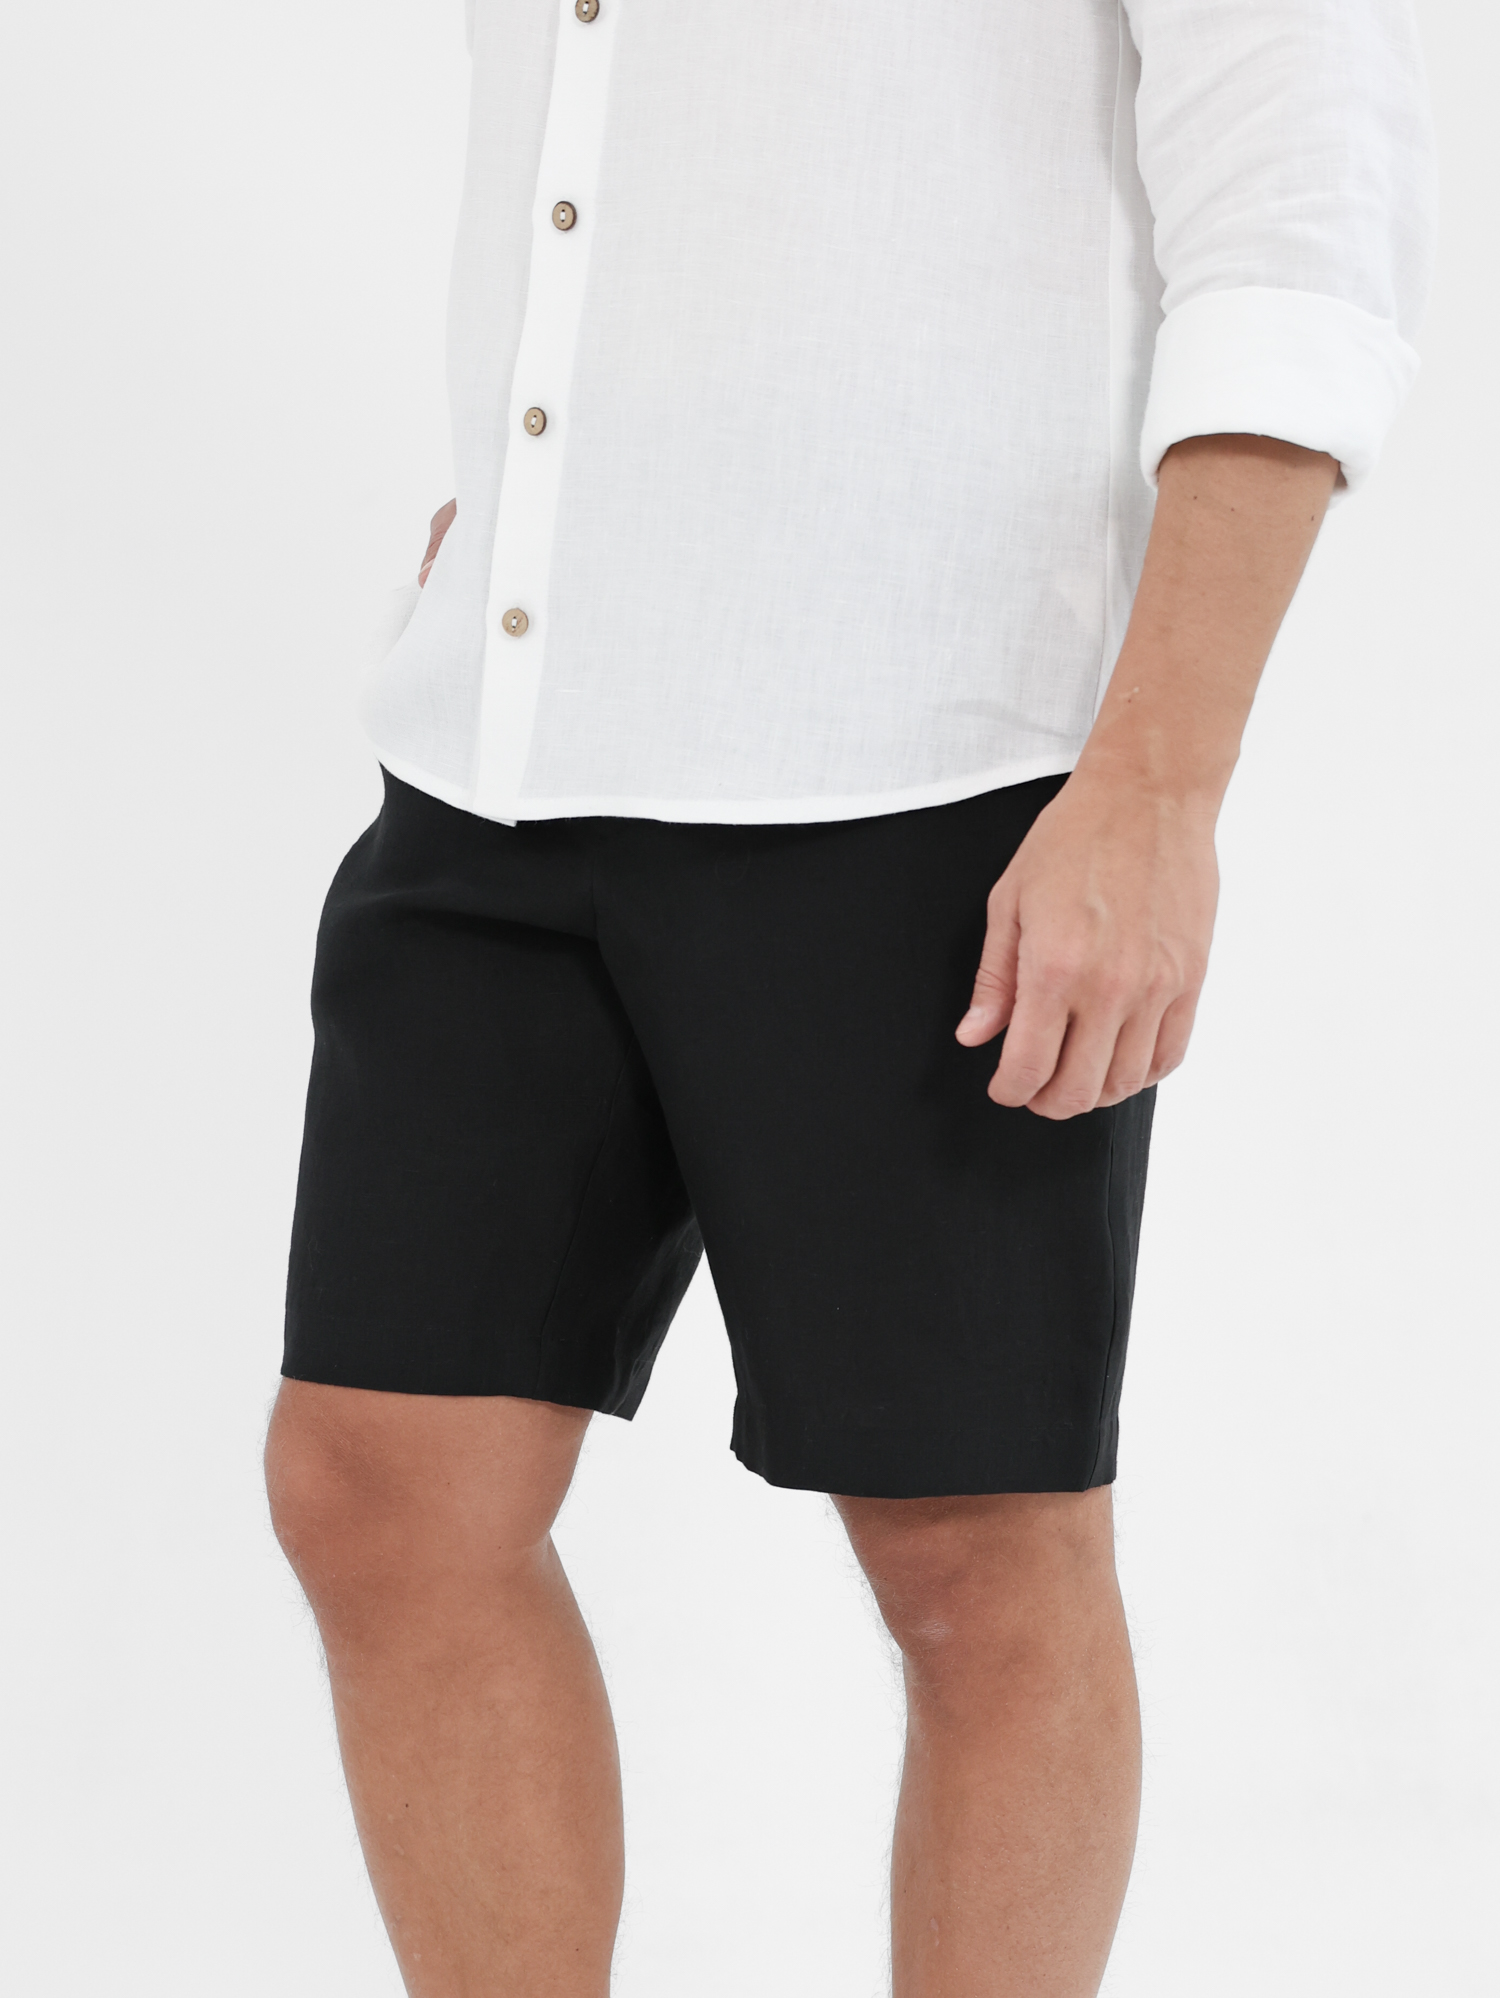 Men's black linen shorts